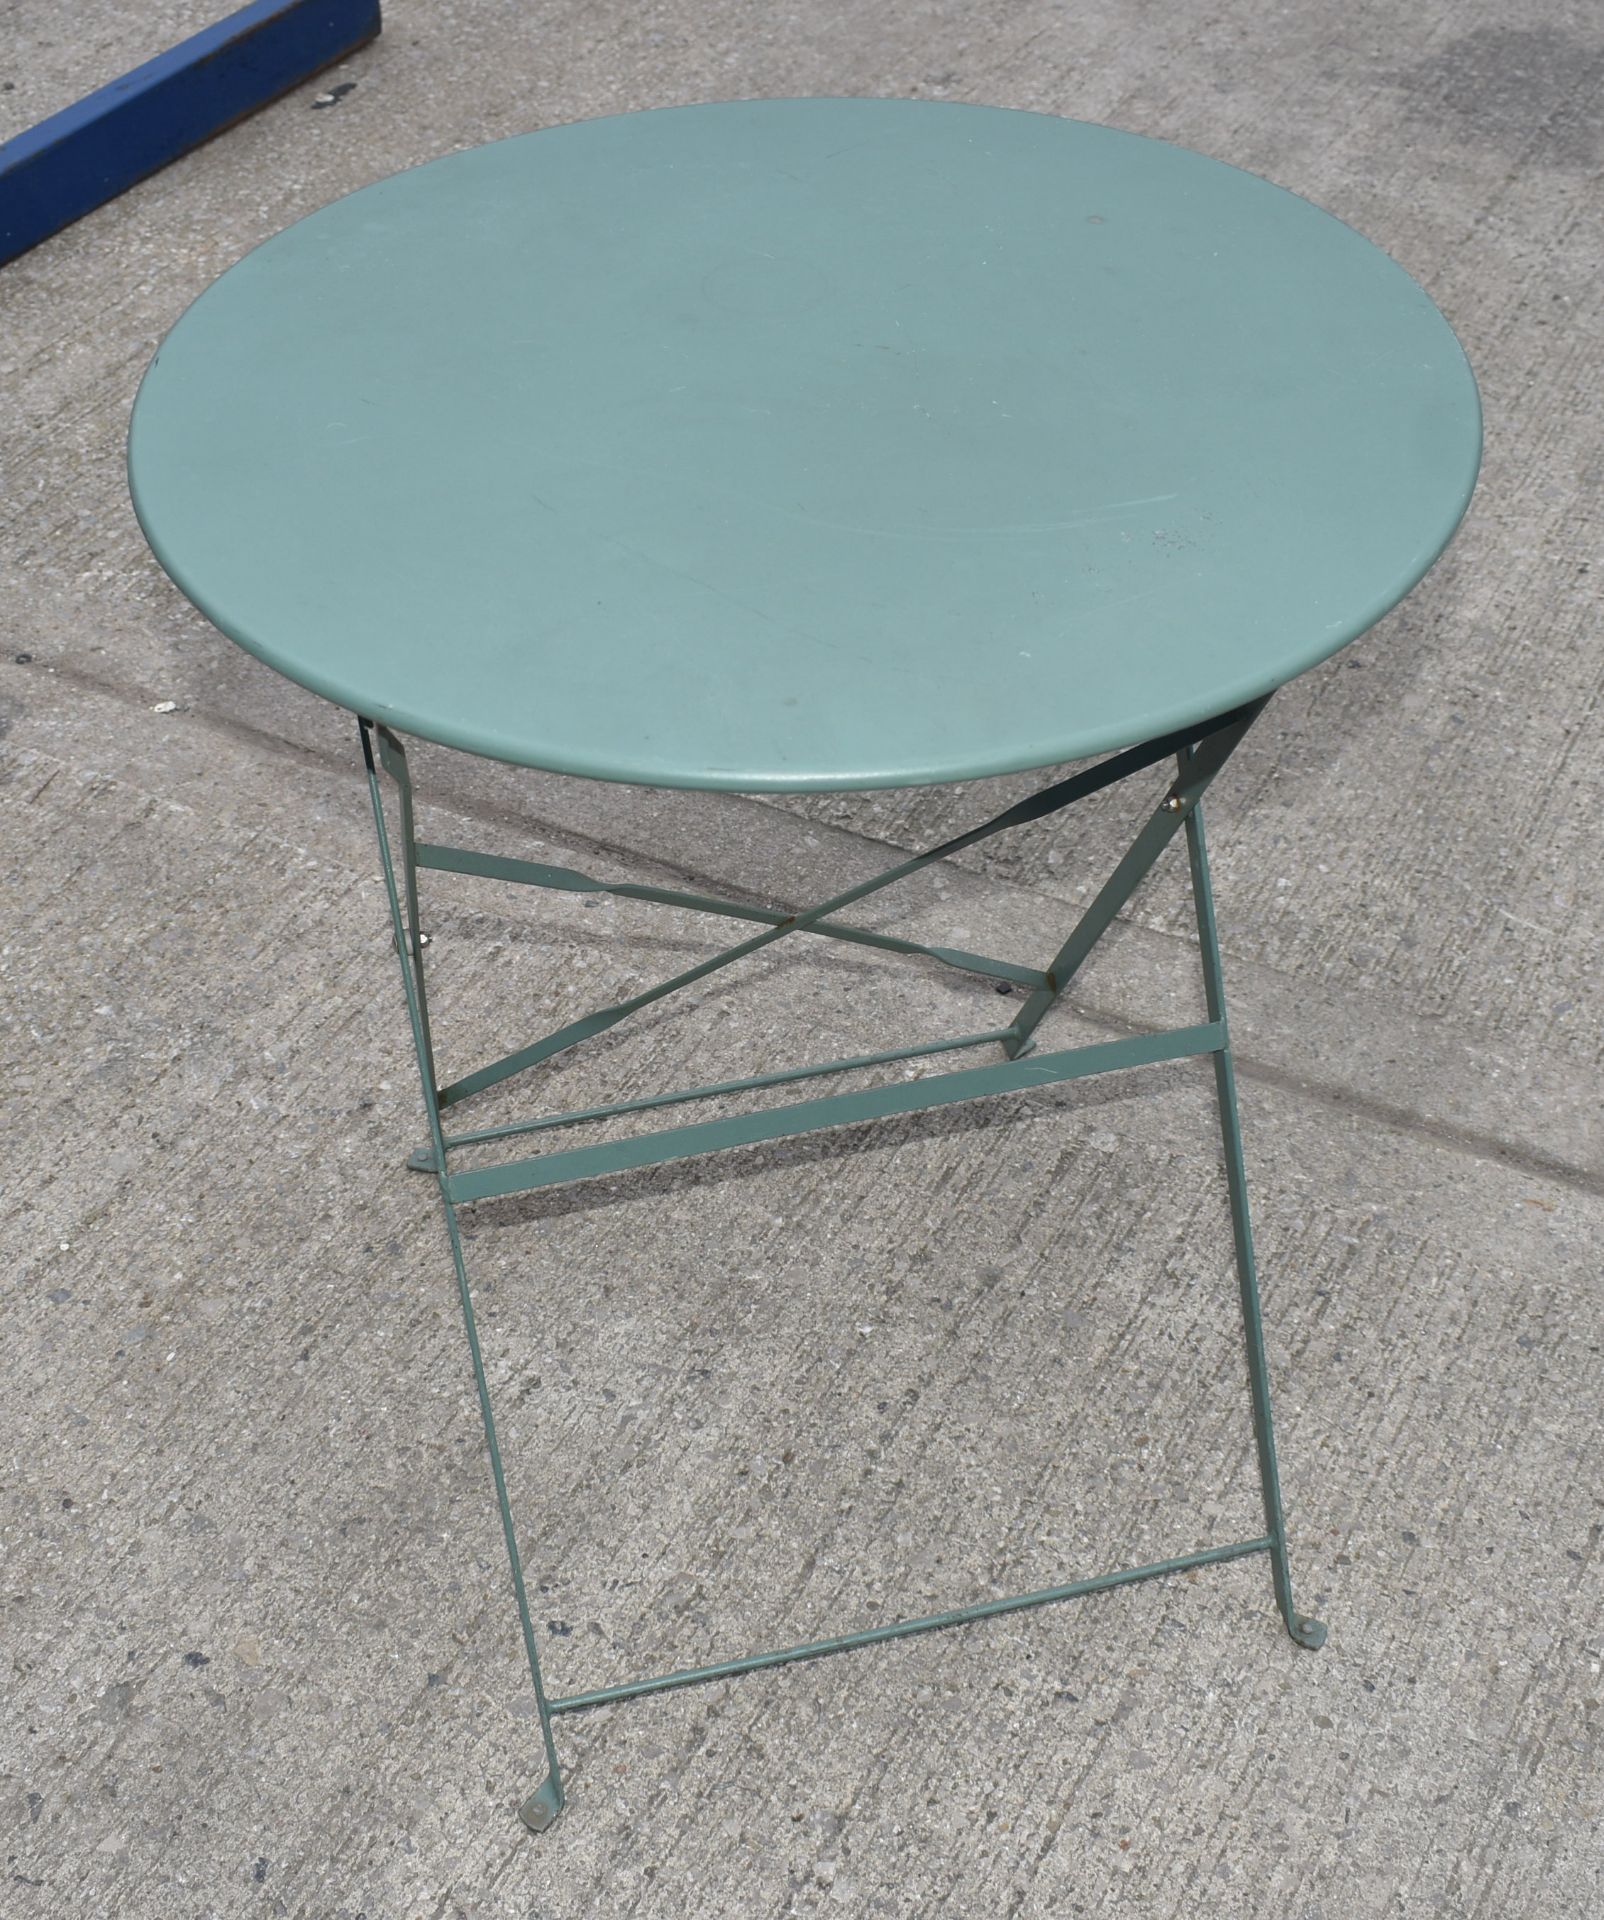 1 x Round Foldaway Green Metal Garden Table - 60 (D) x 71 (H) cms - Ref: K235 - CL905 - Location: Al - Image 5 of 10